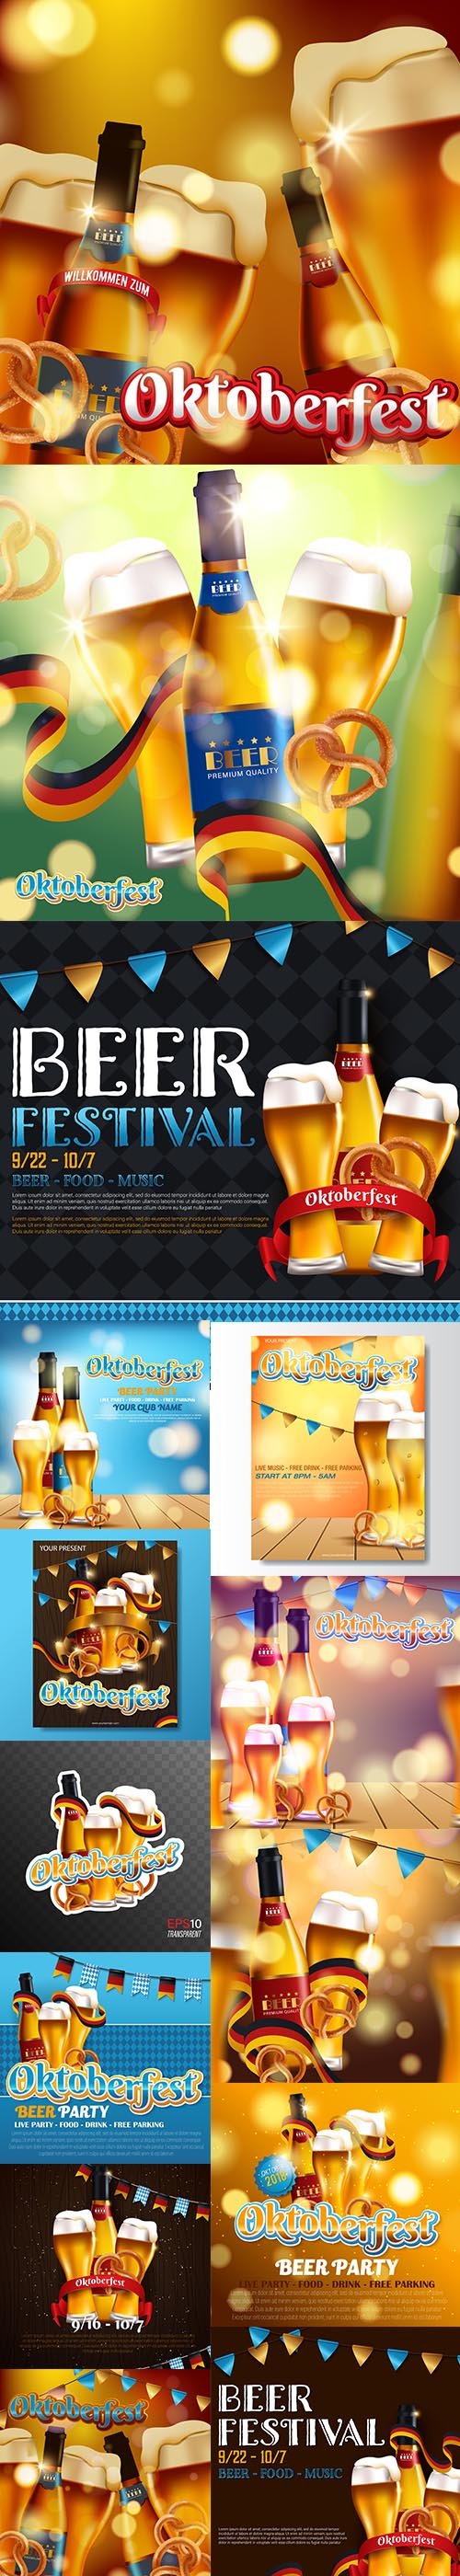 Advertising Traditional Oktoberfest Beer Festival Illustrations Set